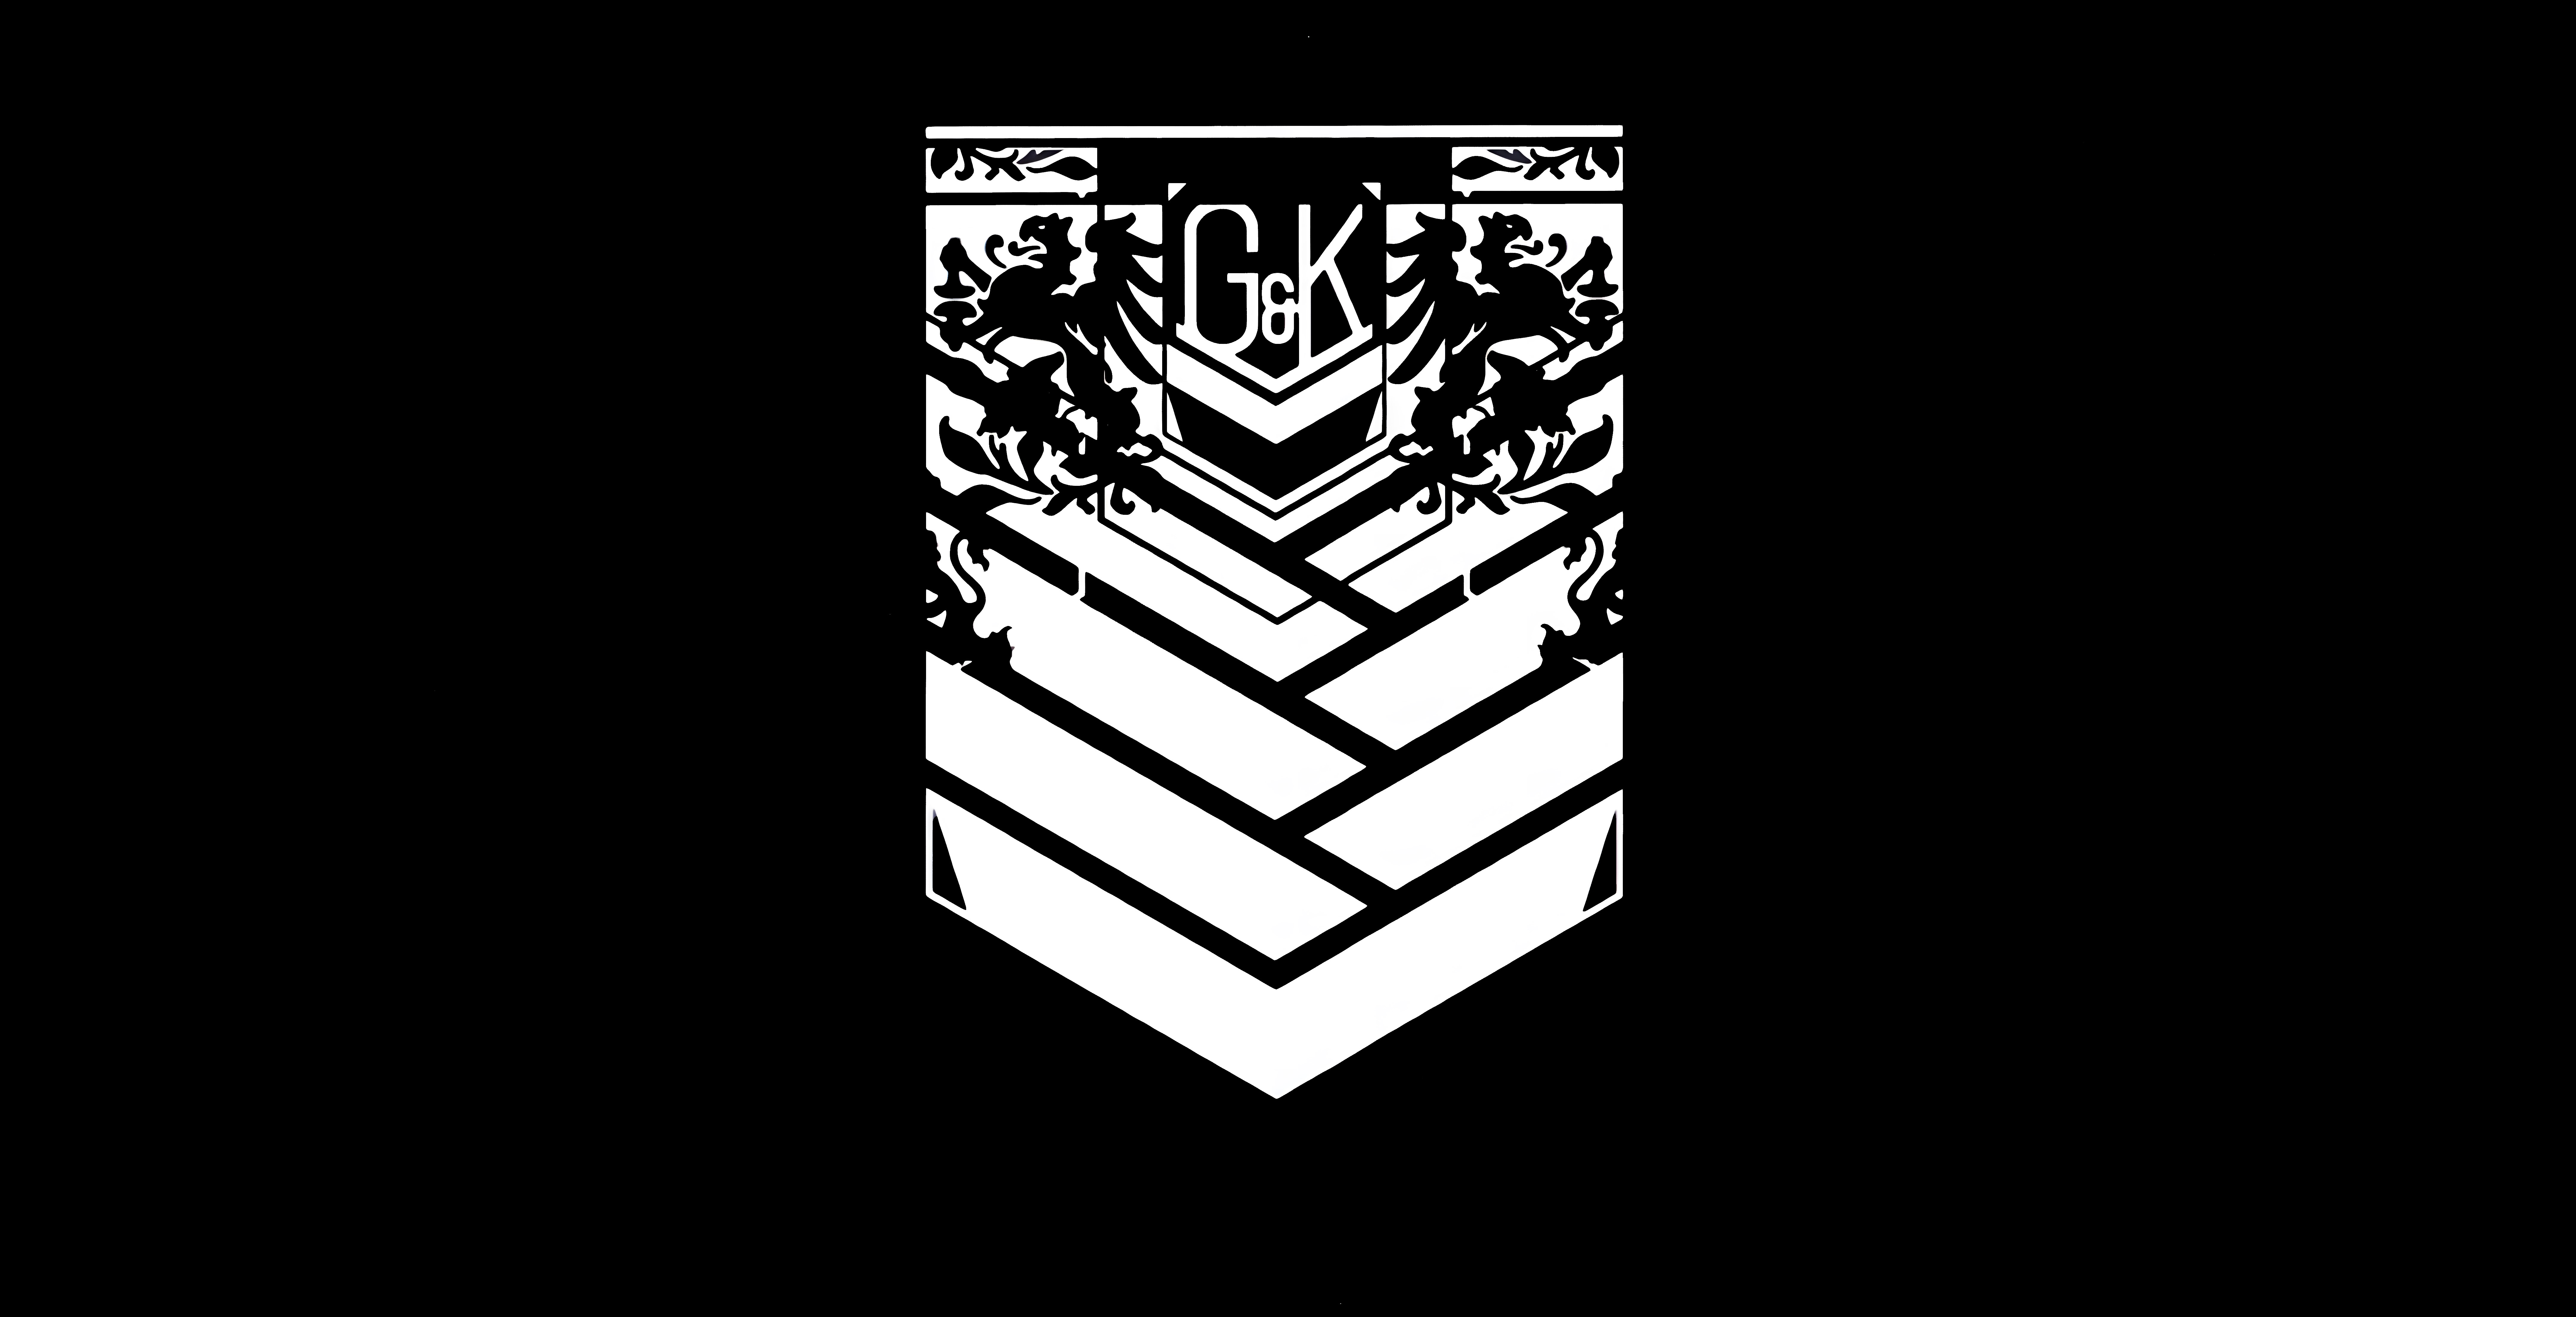 General 8640x4416 Girls Frontline symbols logo simple background black background griffins minimalism